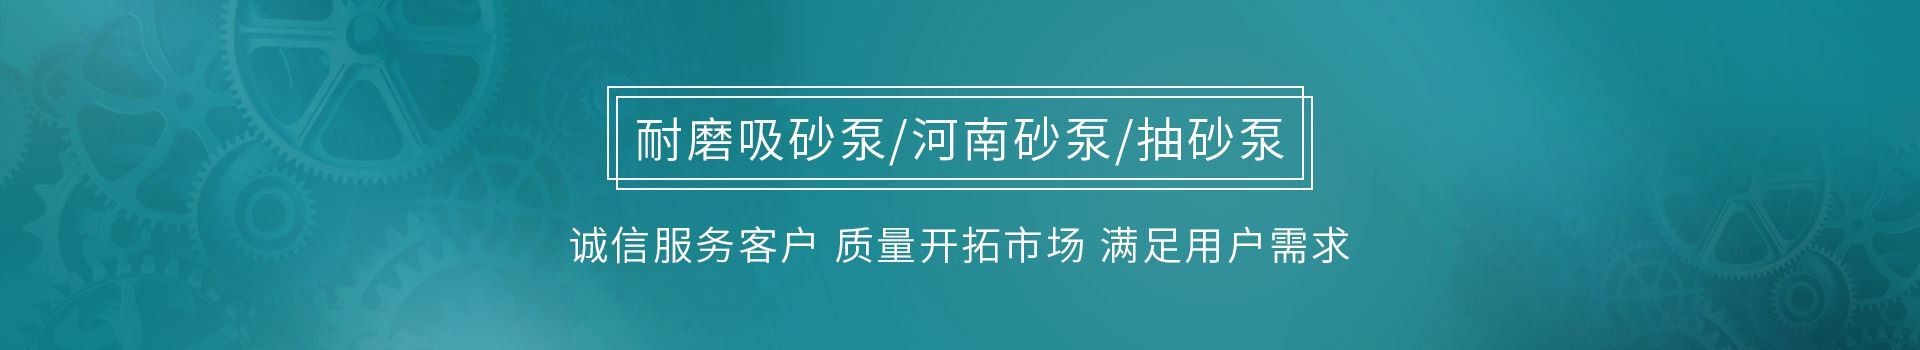 k8凯发(中国)app官方网站_image2180